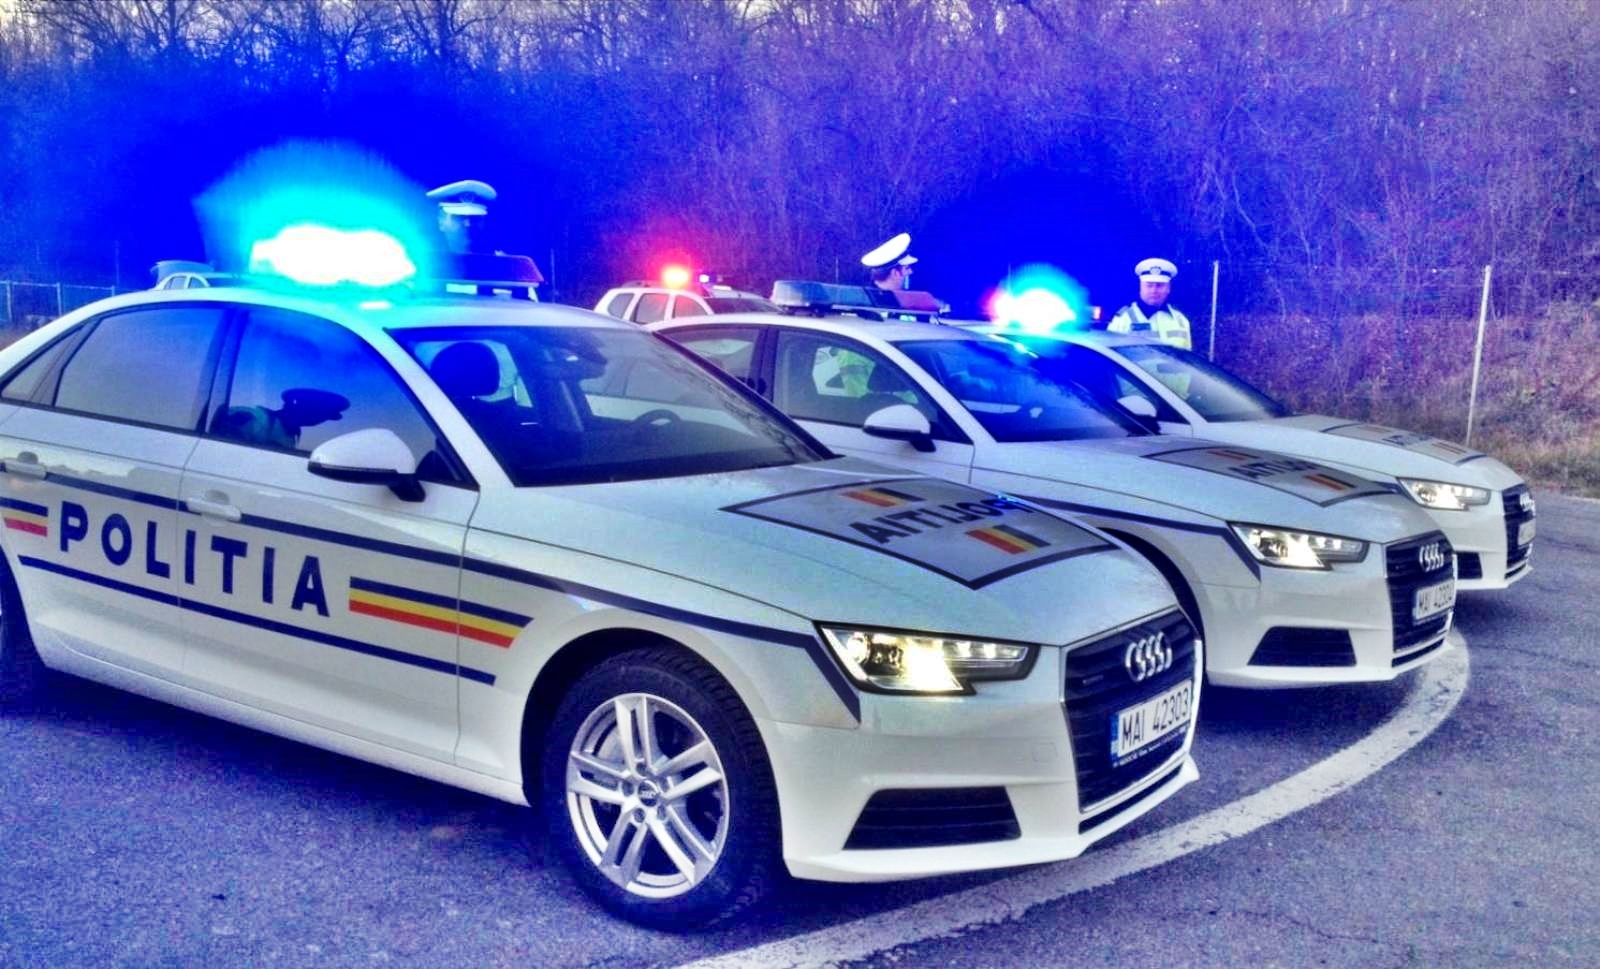 Politia Romana: Noul Avertisment Privind Condusul Agresiv thumbnail